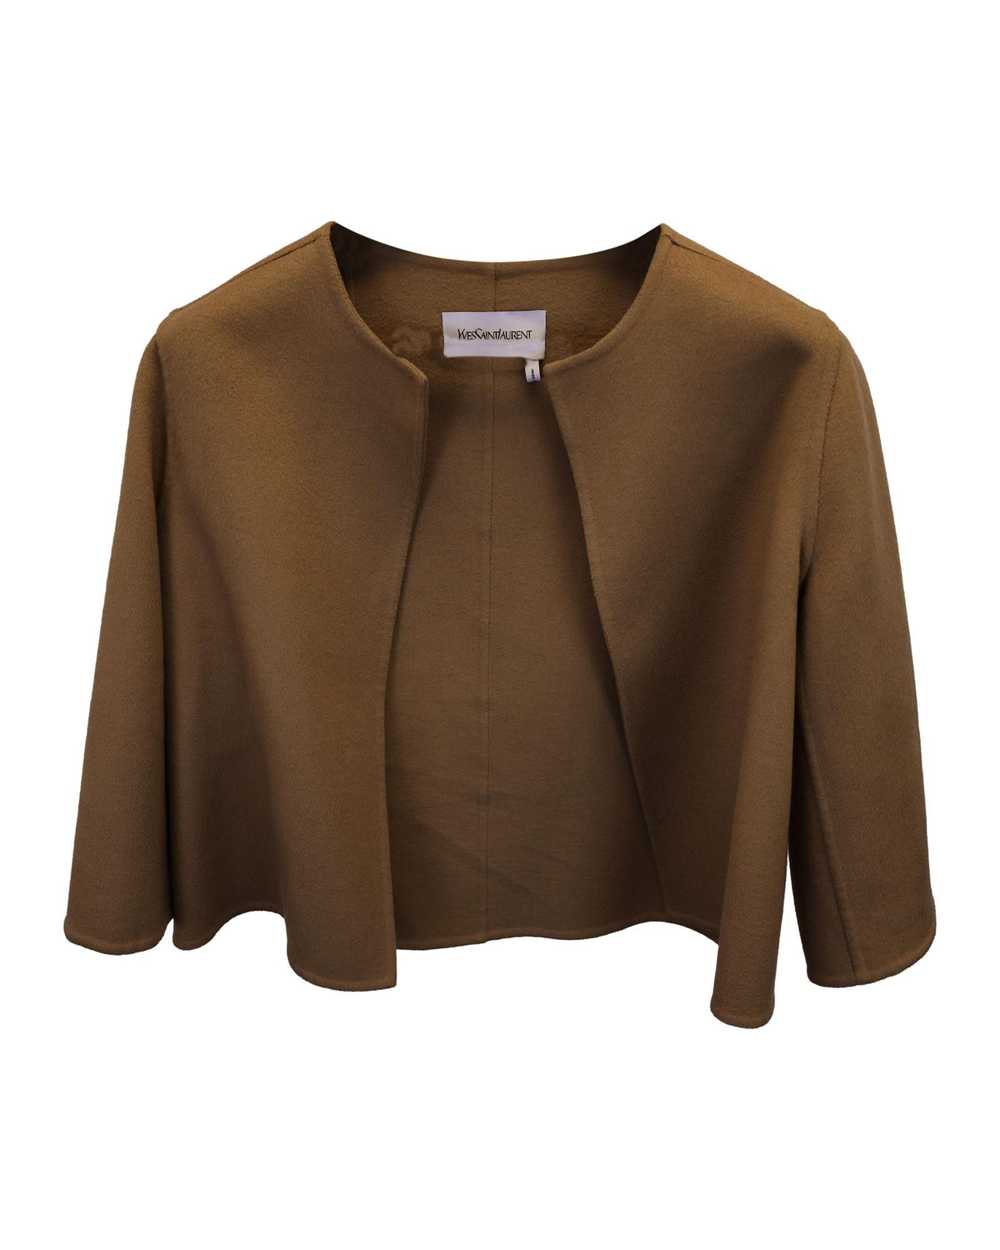 Yves Saint Laurent Luxurious Brown Cashmere Cropp… - image 1